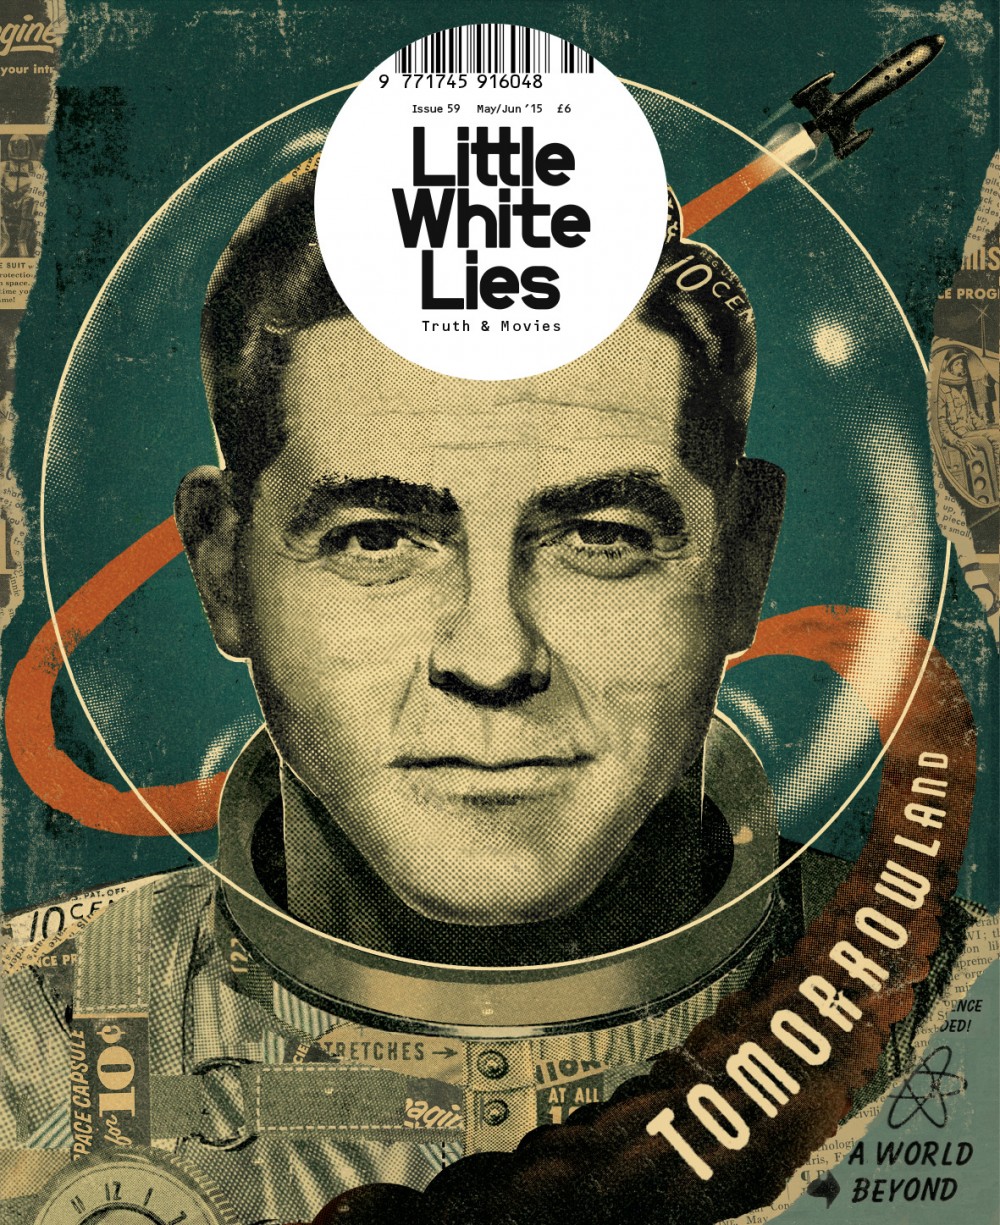 Little White Lies #59: Tomorrowland